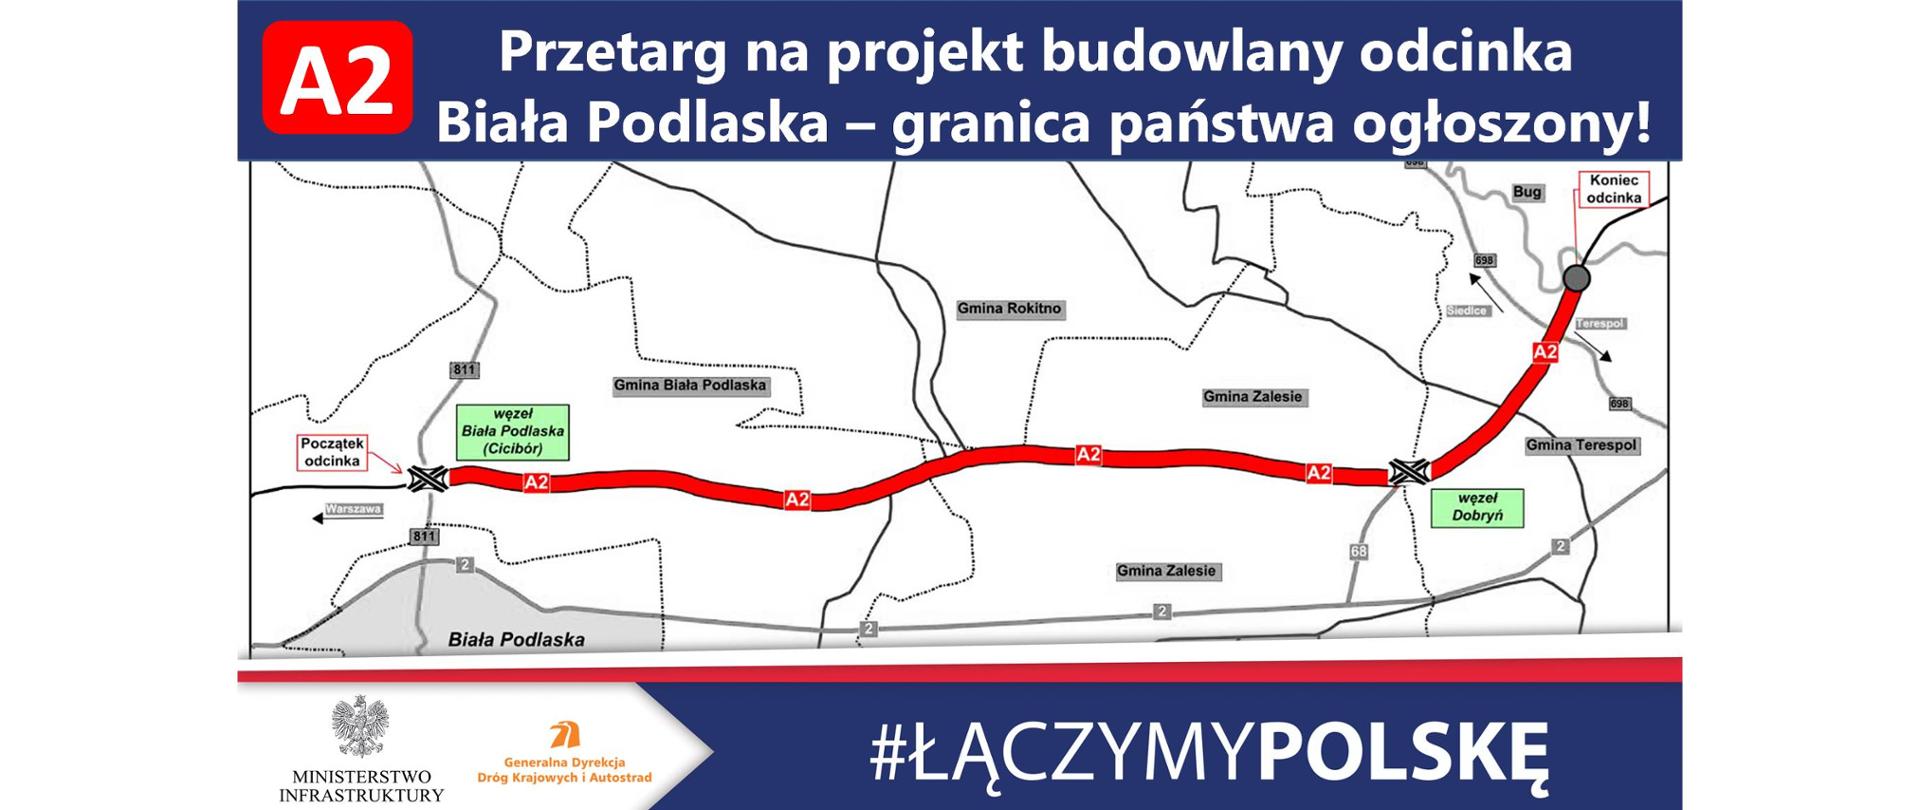 A2 przetarg na projekt odc. Biała Podlaska - granica